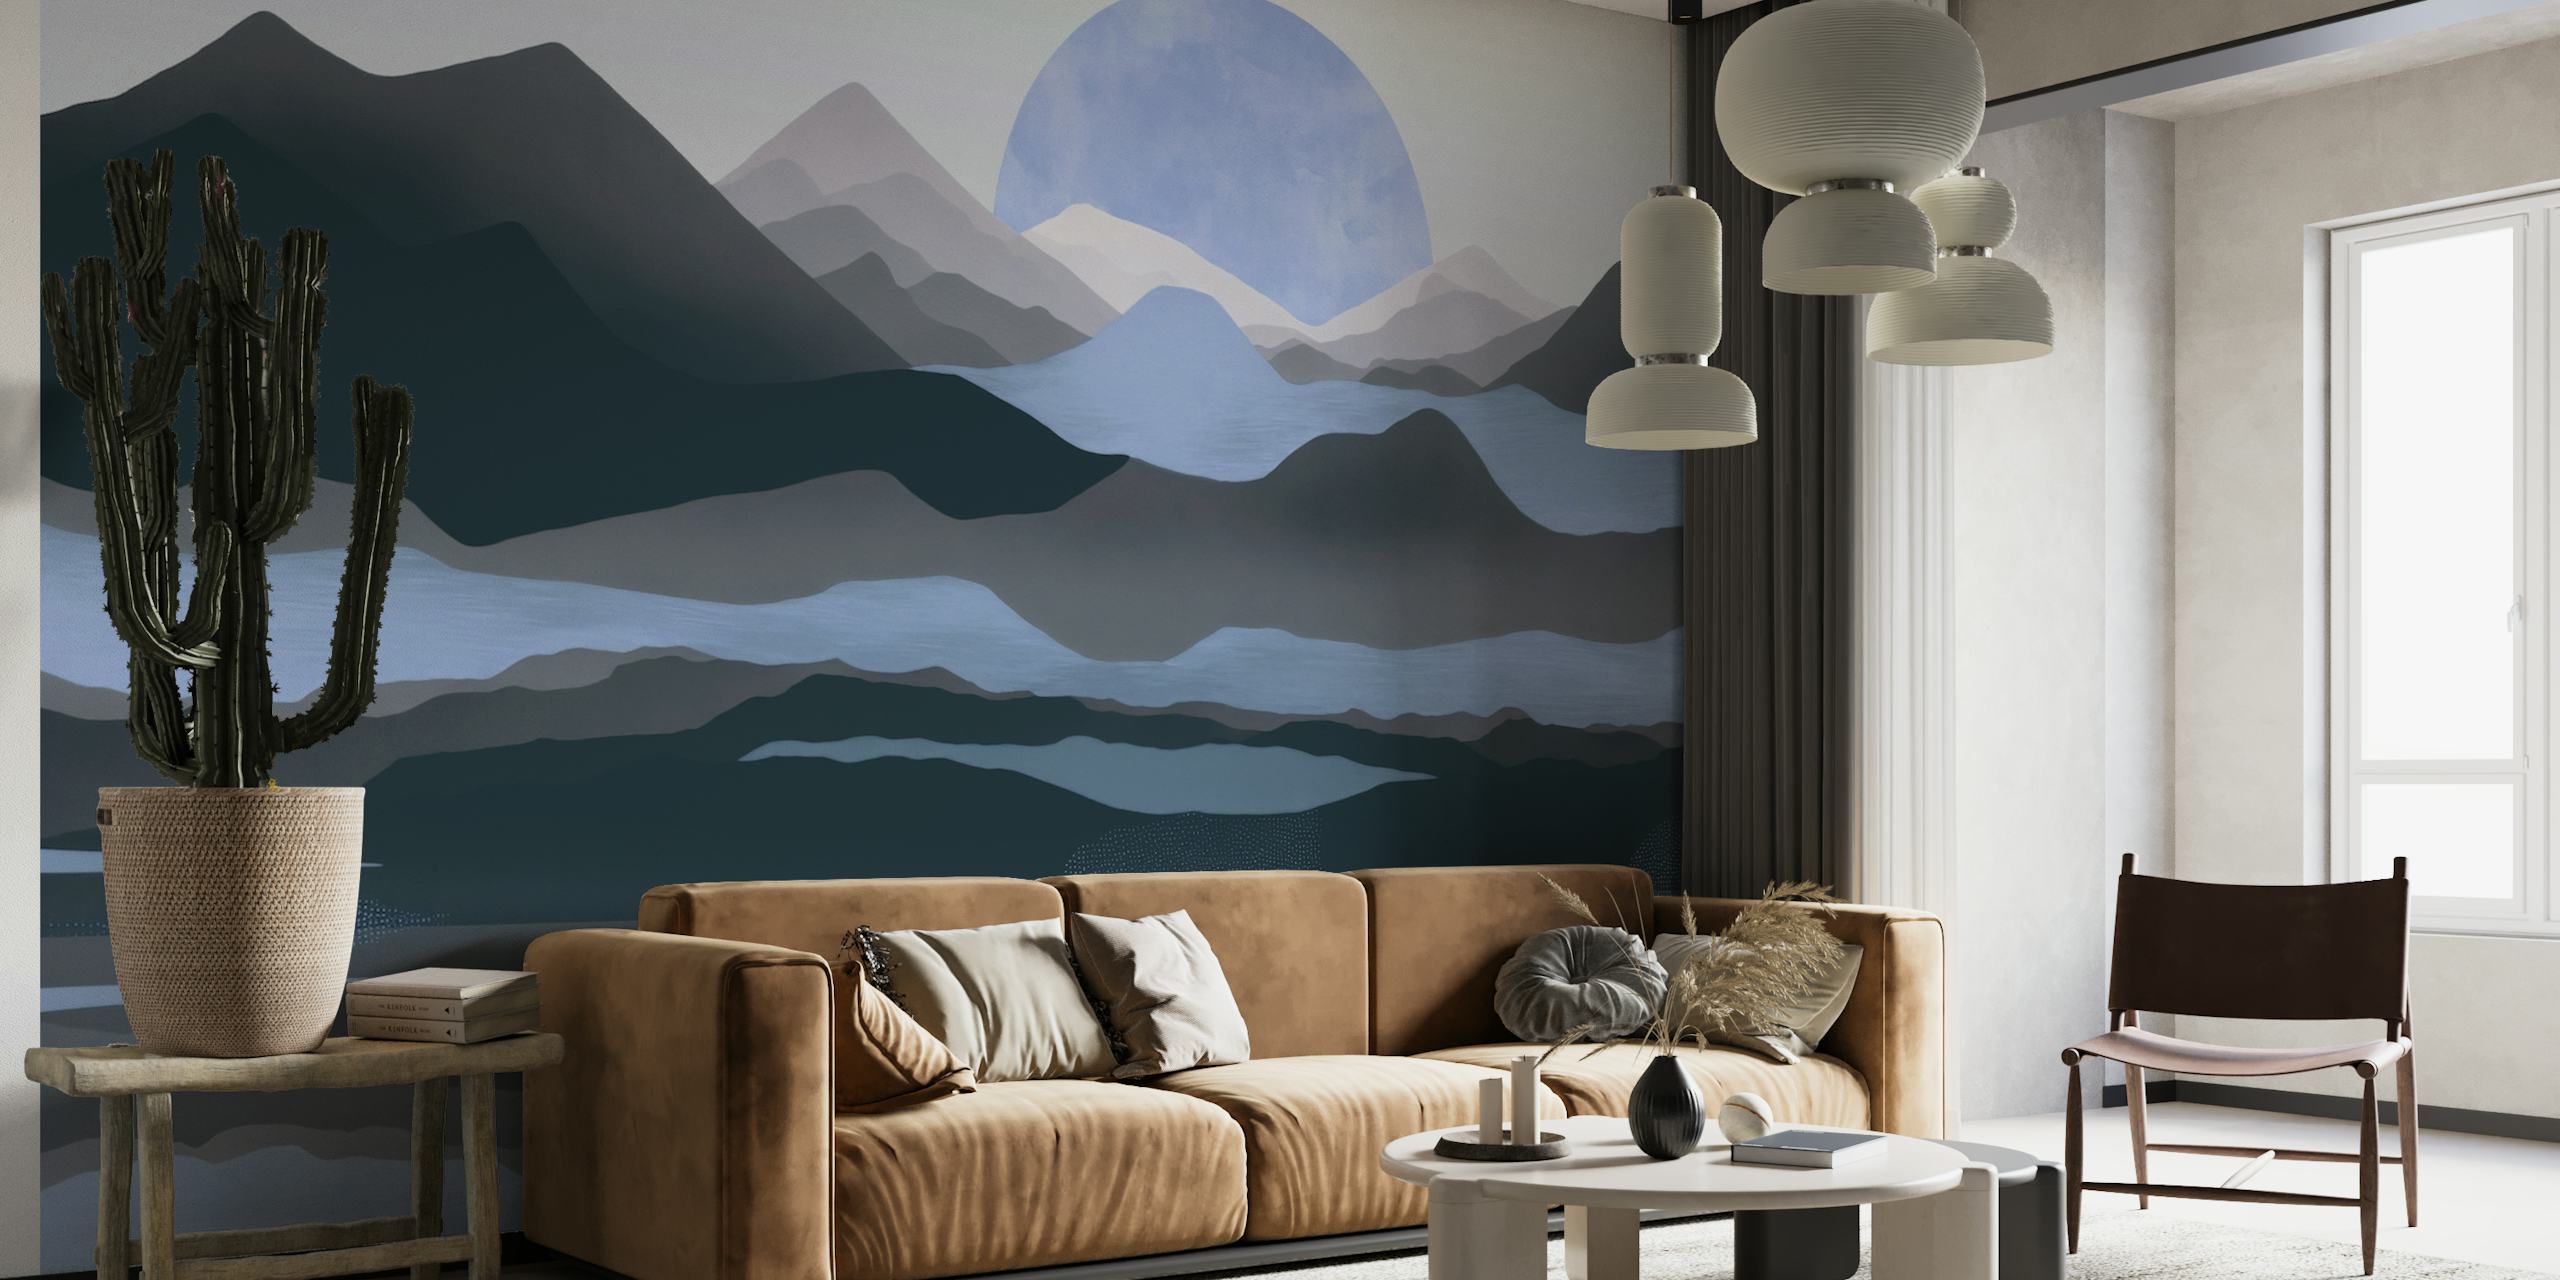 Calm Moon Rise over Mountain Range vægmaleri til rolig indretning